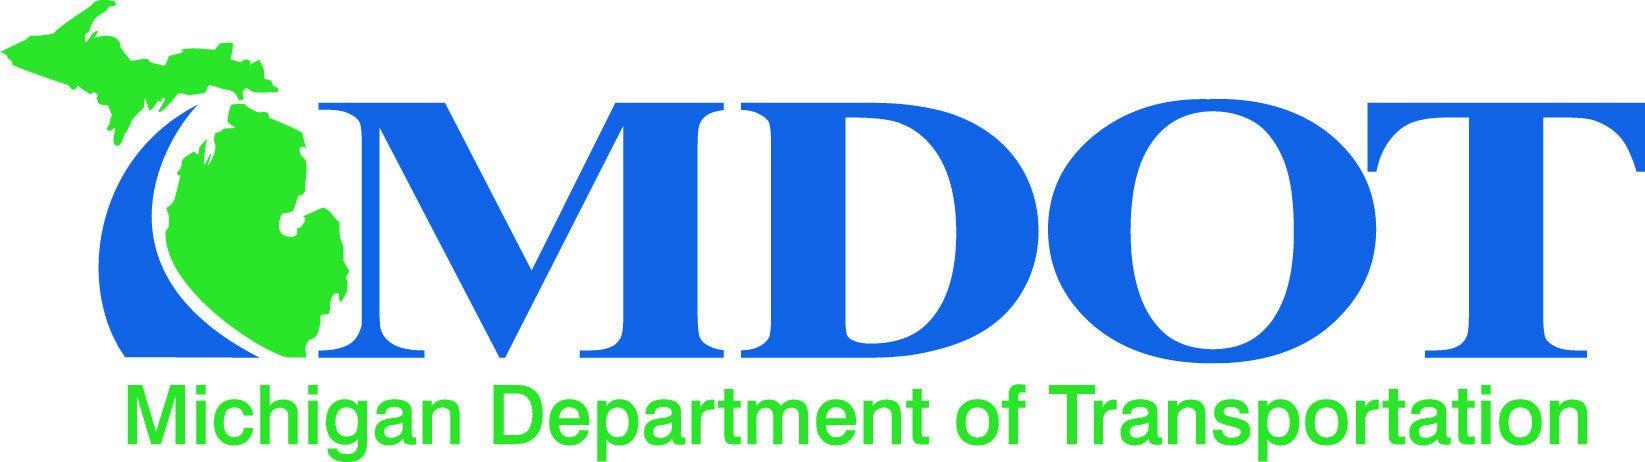 MDOT Logo - Mdot Logo Township Of Texas